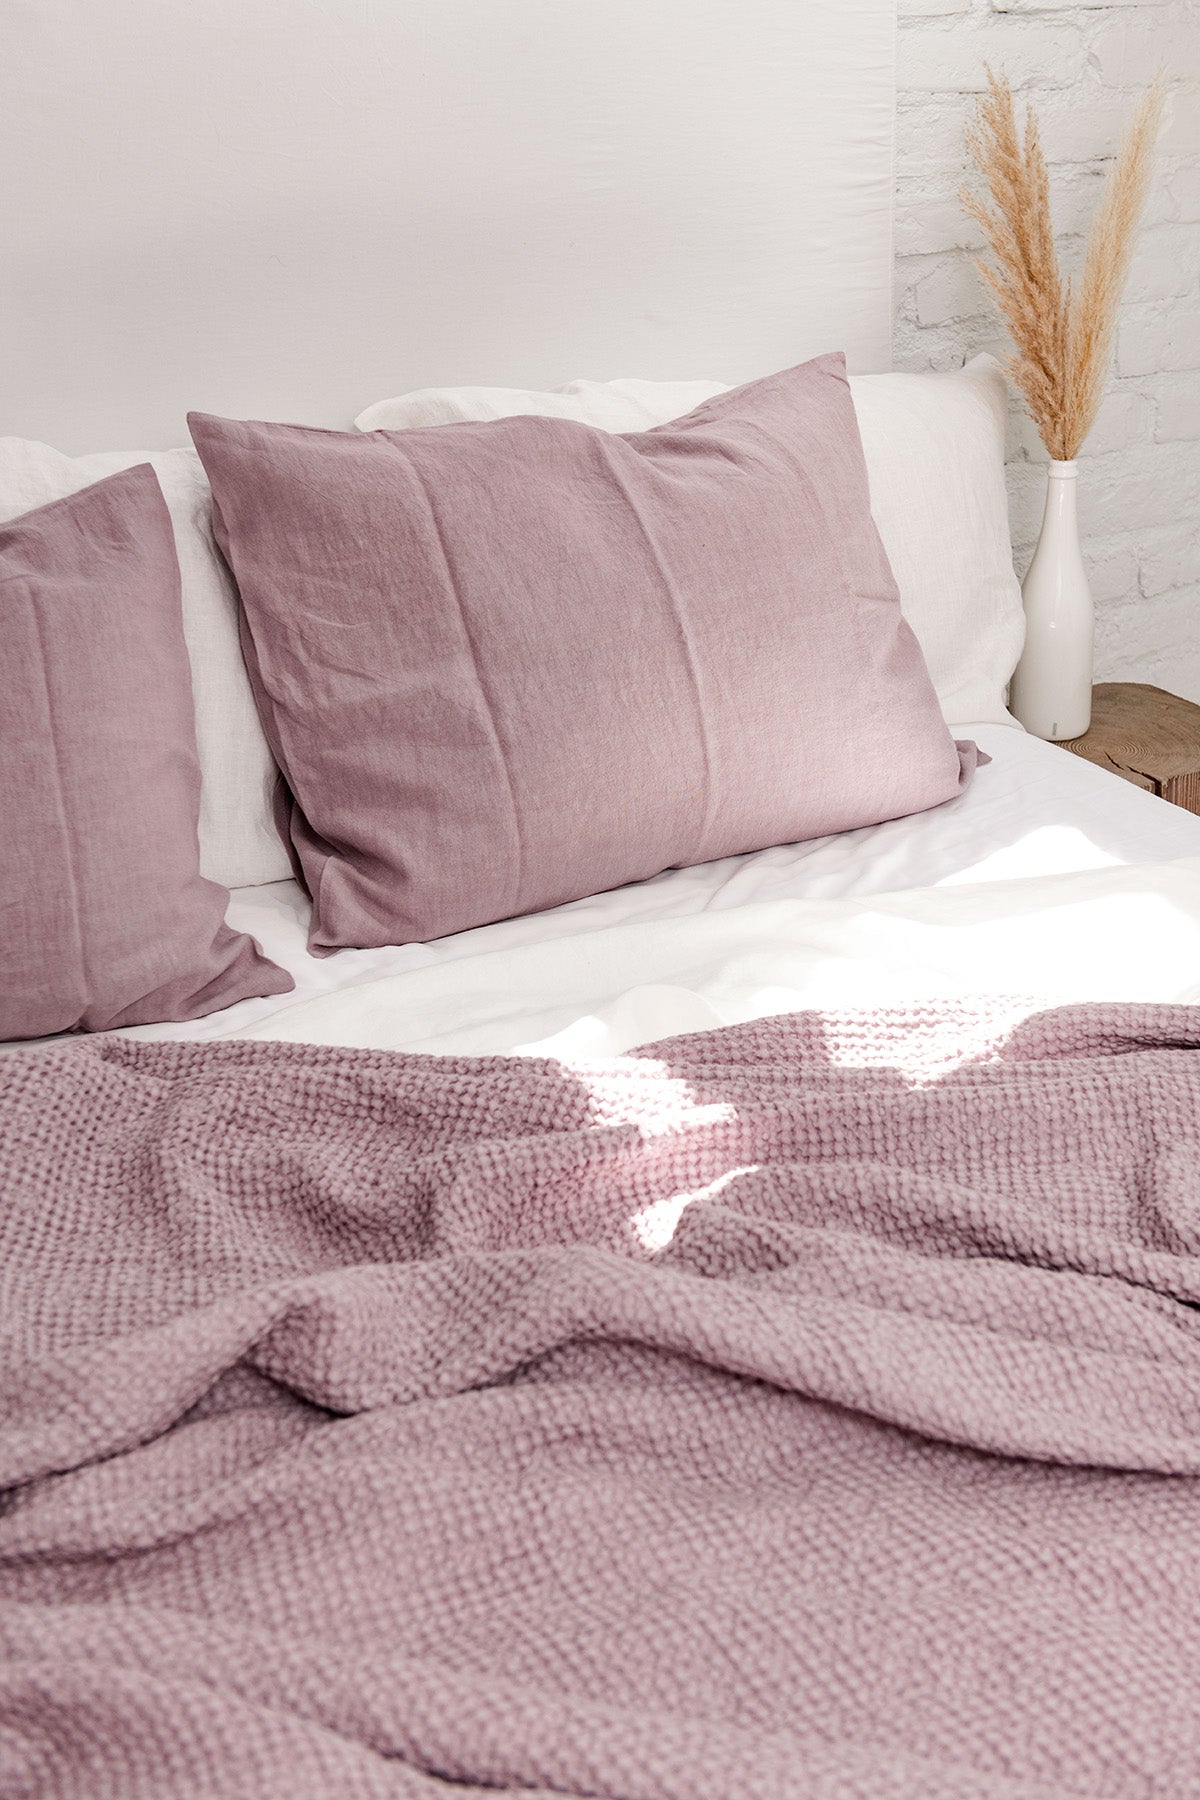 Dusty Rose Linen Waffle Blanket On Bed By AmourLinen